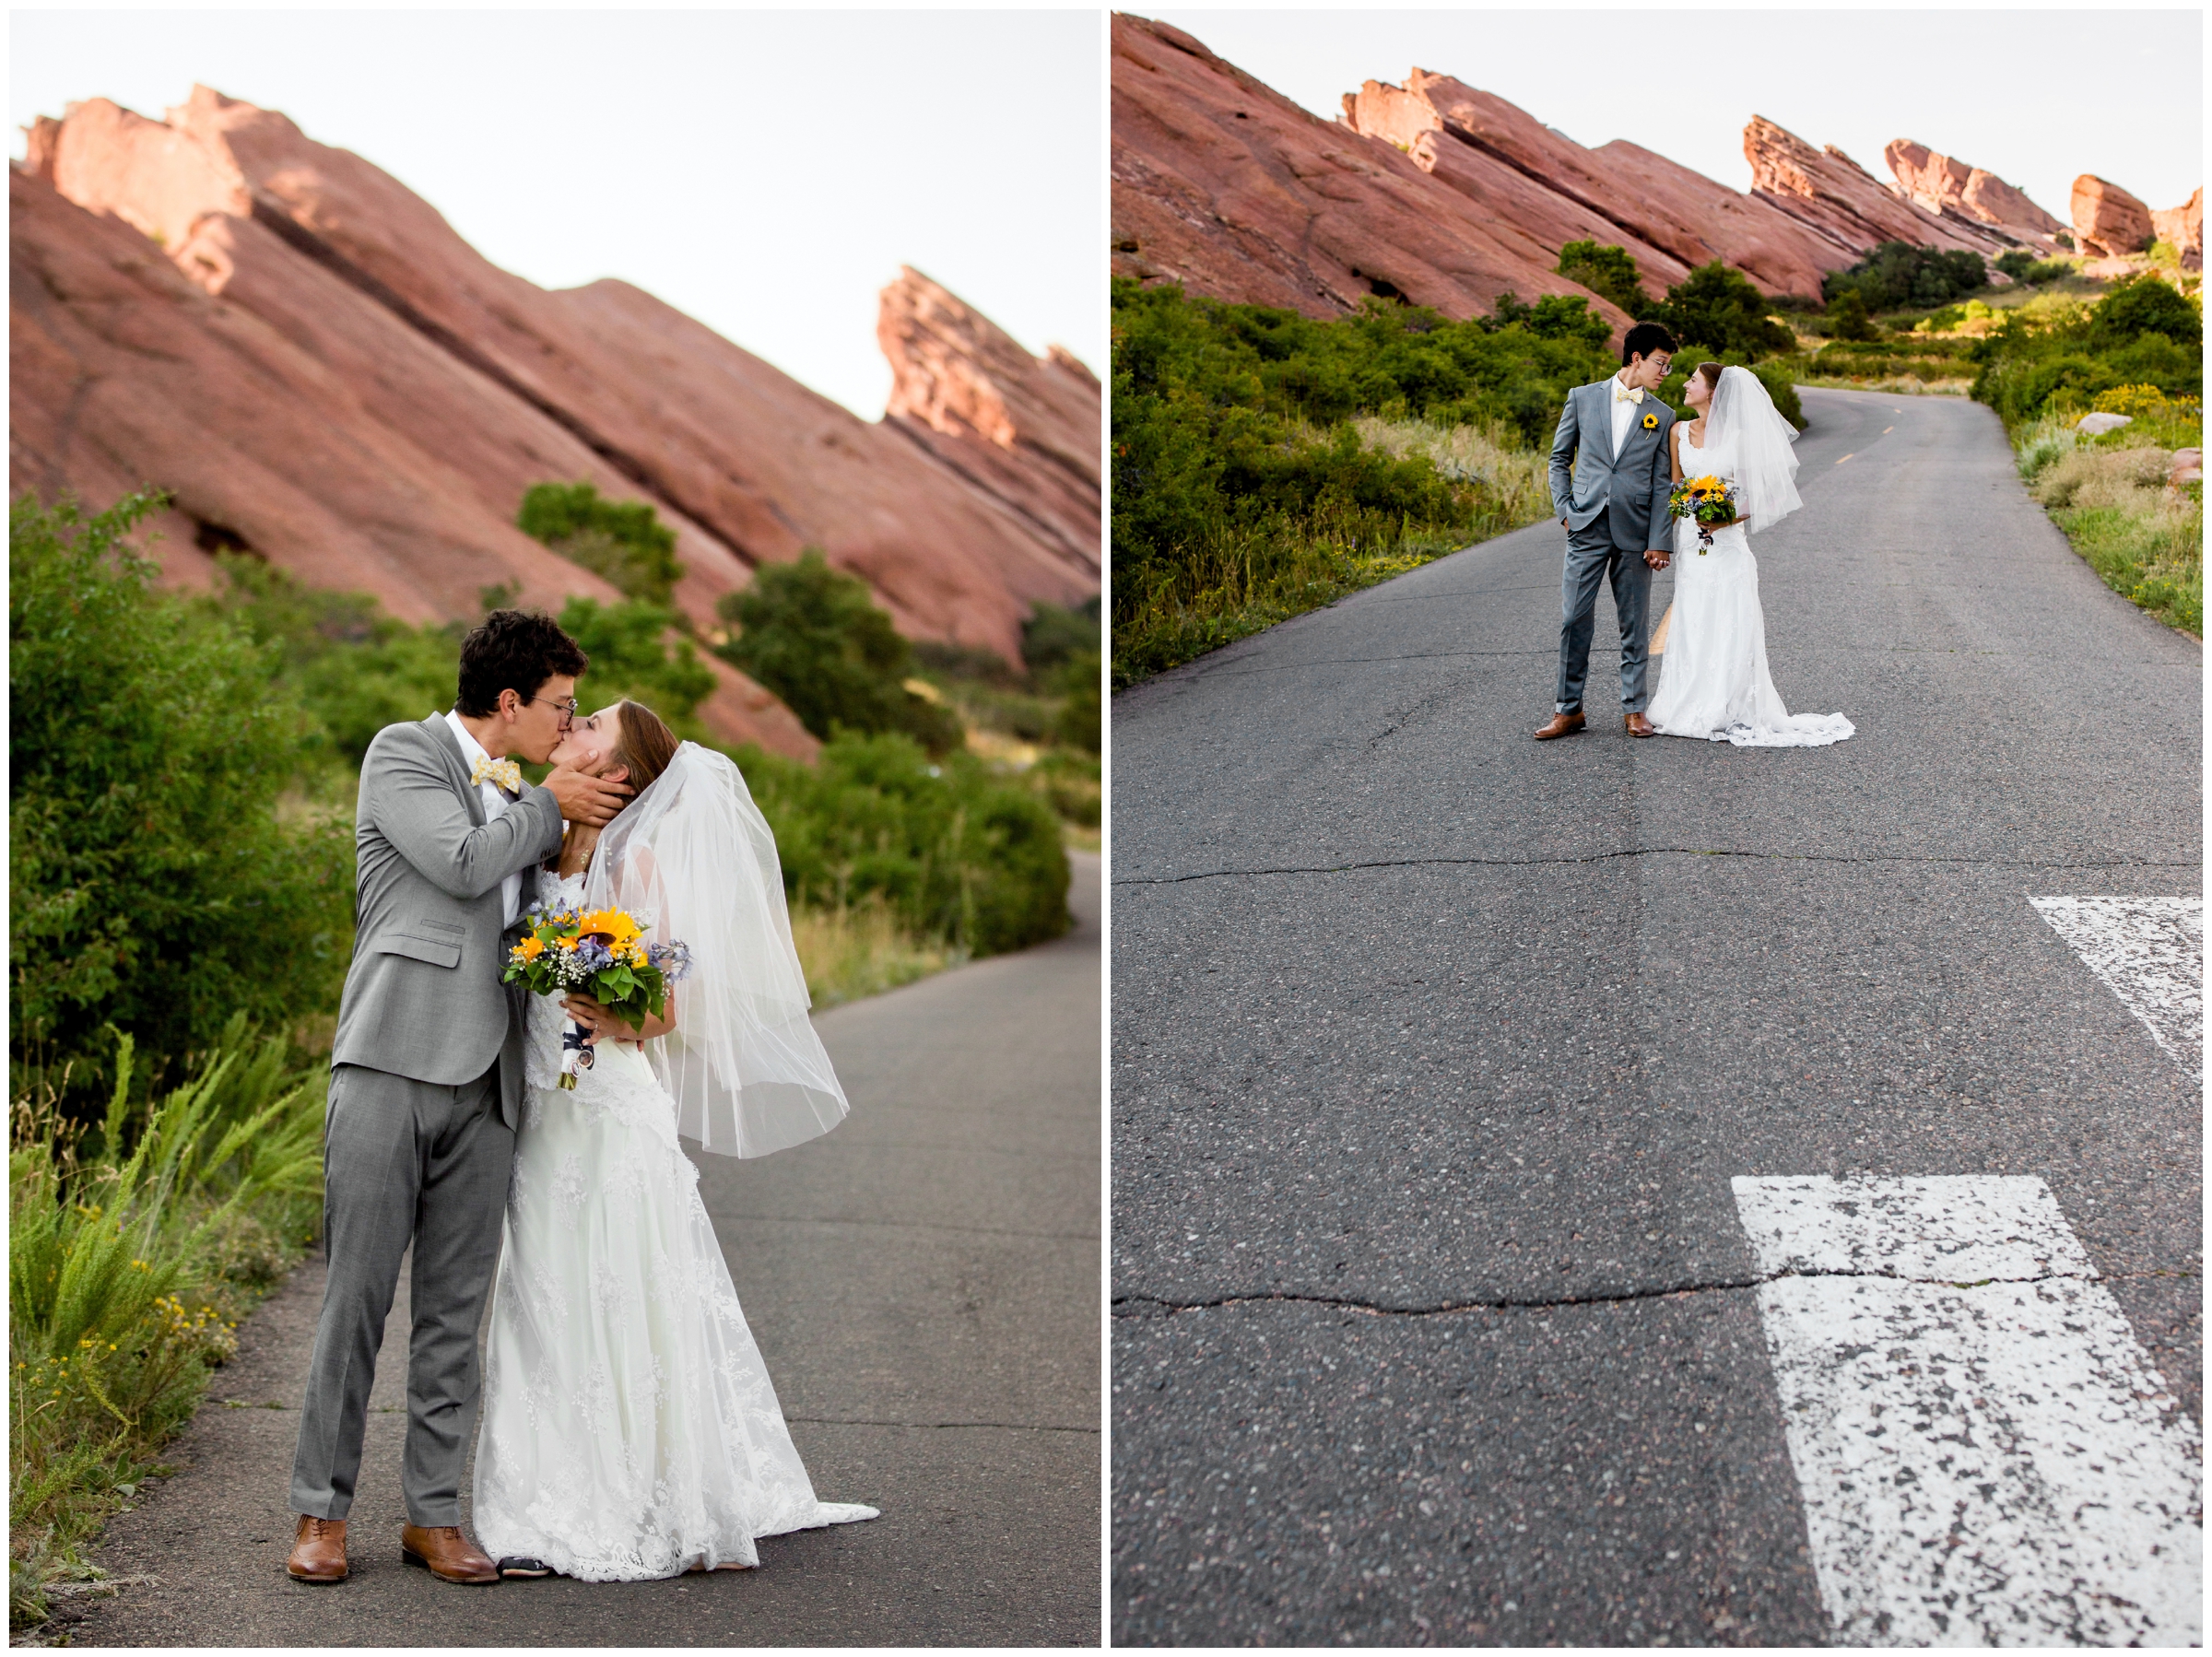 Red Rocks Amphitheater wedding photography by Plum Pretty Photo